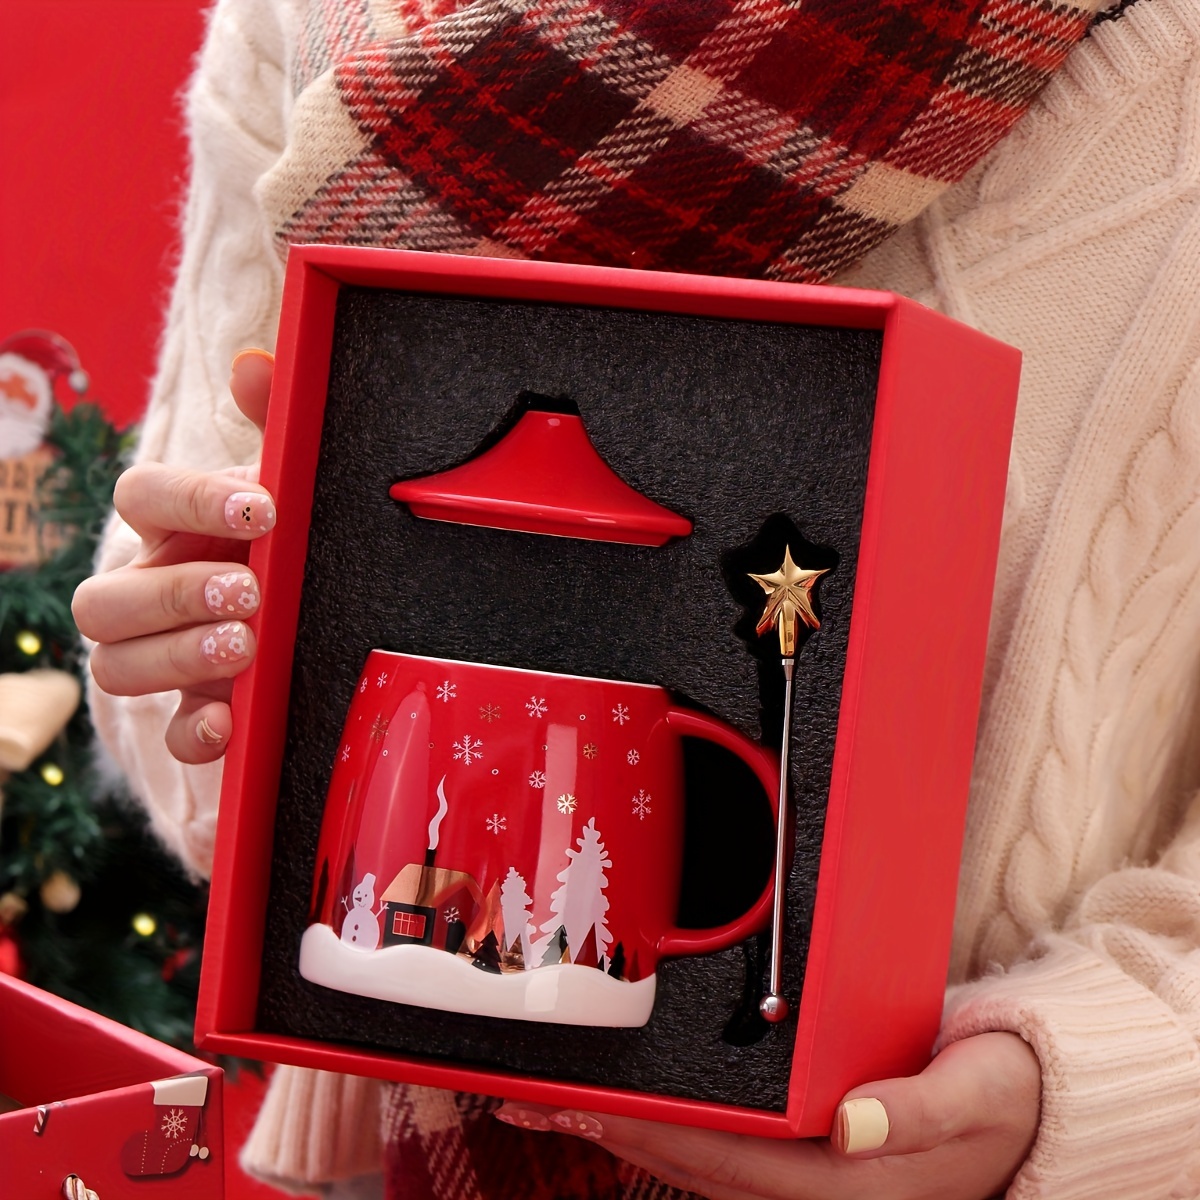 Starbucks 2018 Gift Set Christmas Holiday Coffee Mugs Ornament Cocoa  Exp-1/2020